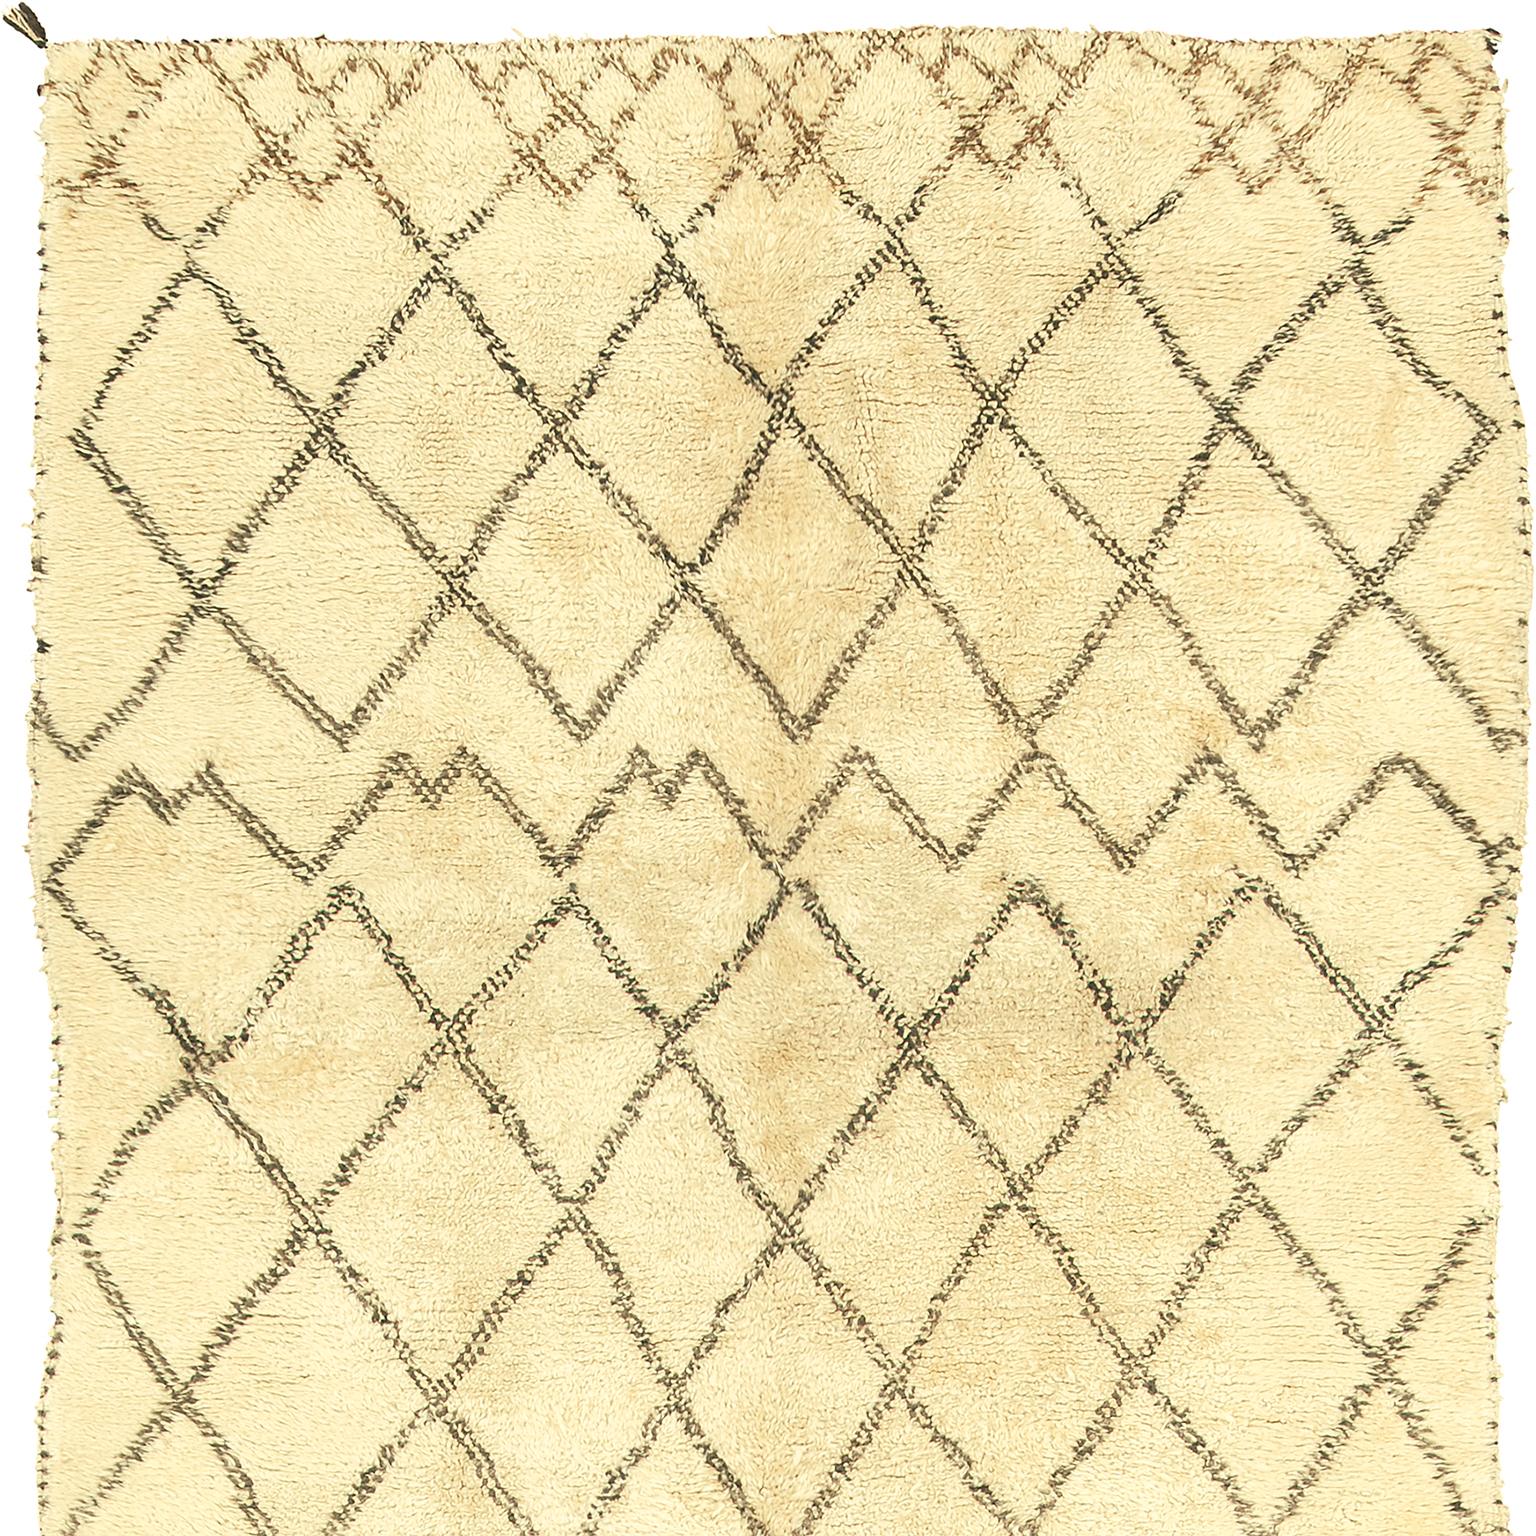 Rustic Mid-20th Century Moroccan Beni Ourain Carpet For Sale